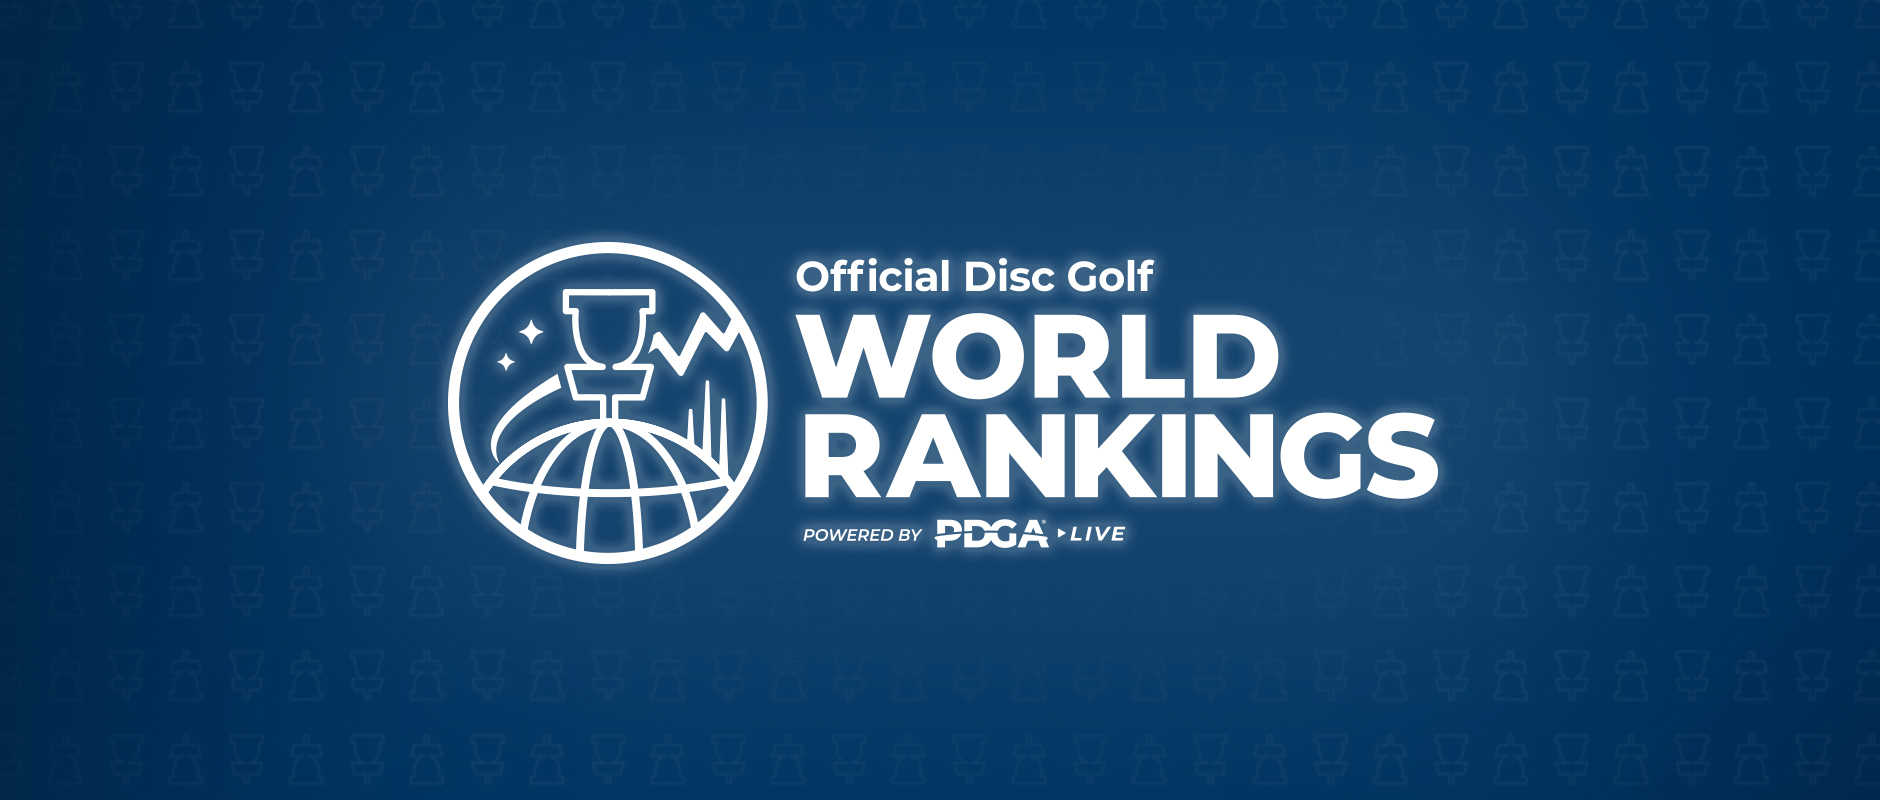 Official Disc Golf World Rankings Professional Disc Golf Association